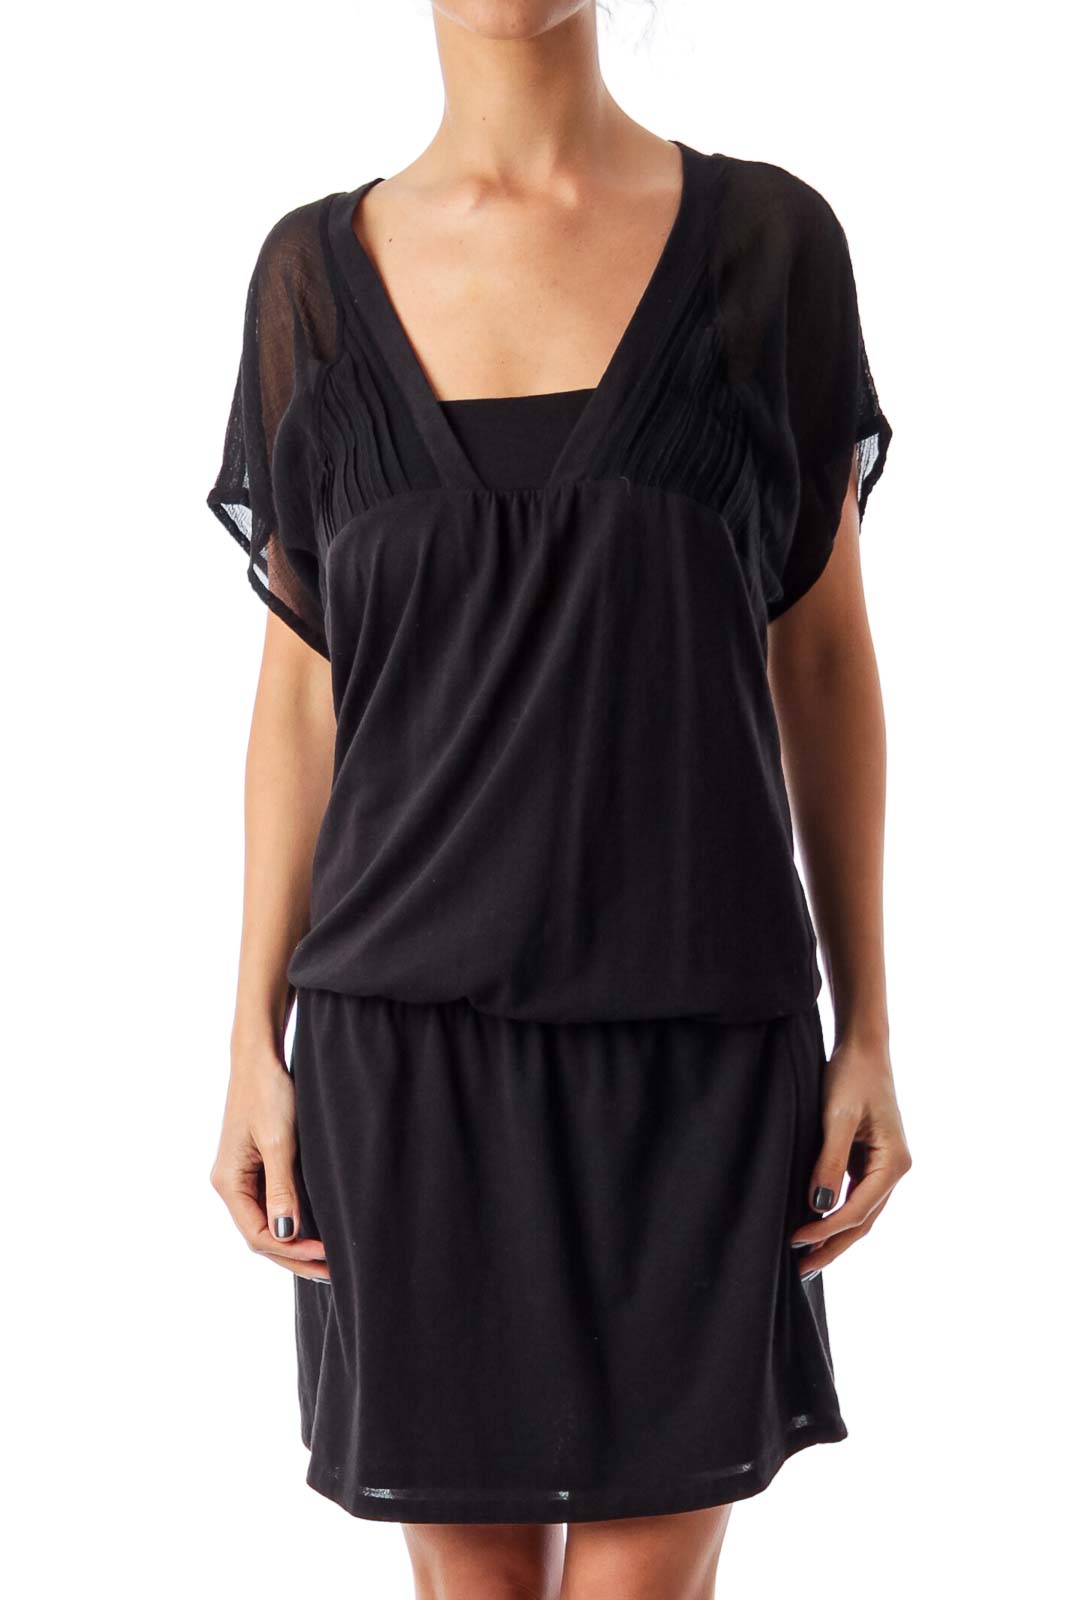 Black Short Sleeve Jersey Dress Front